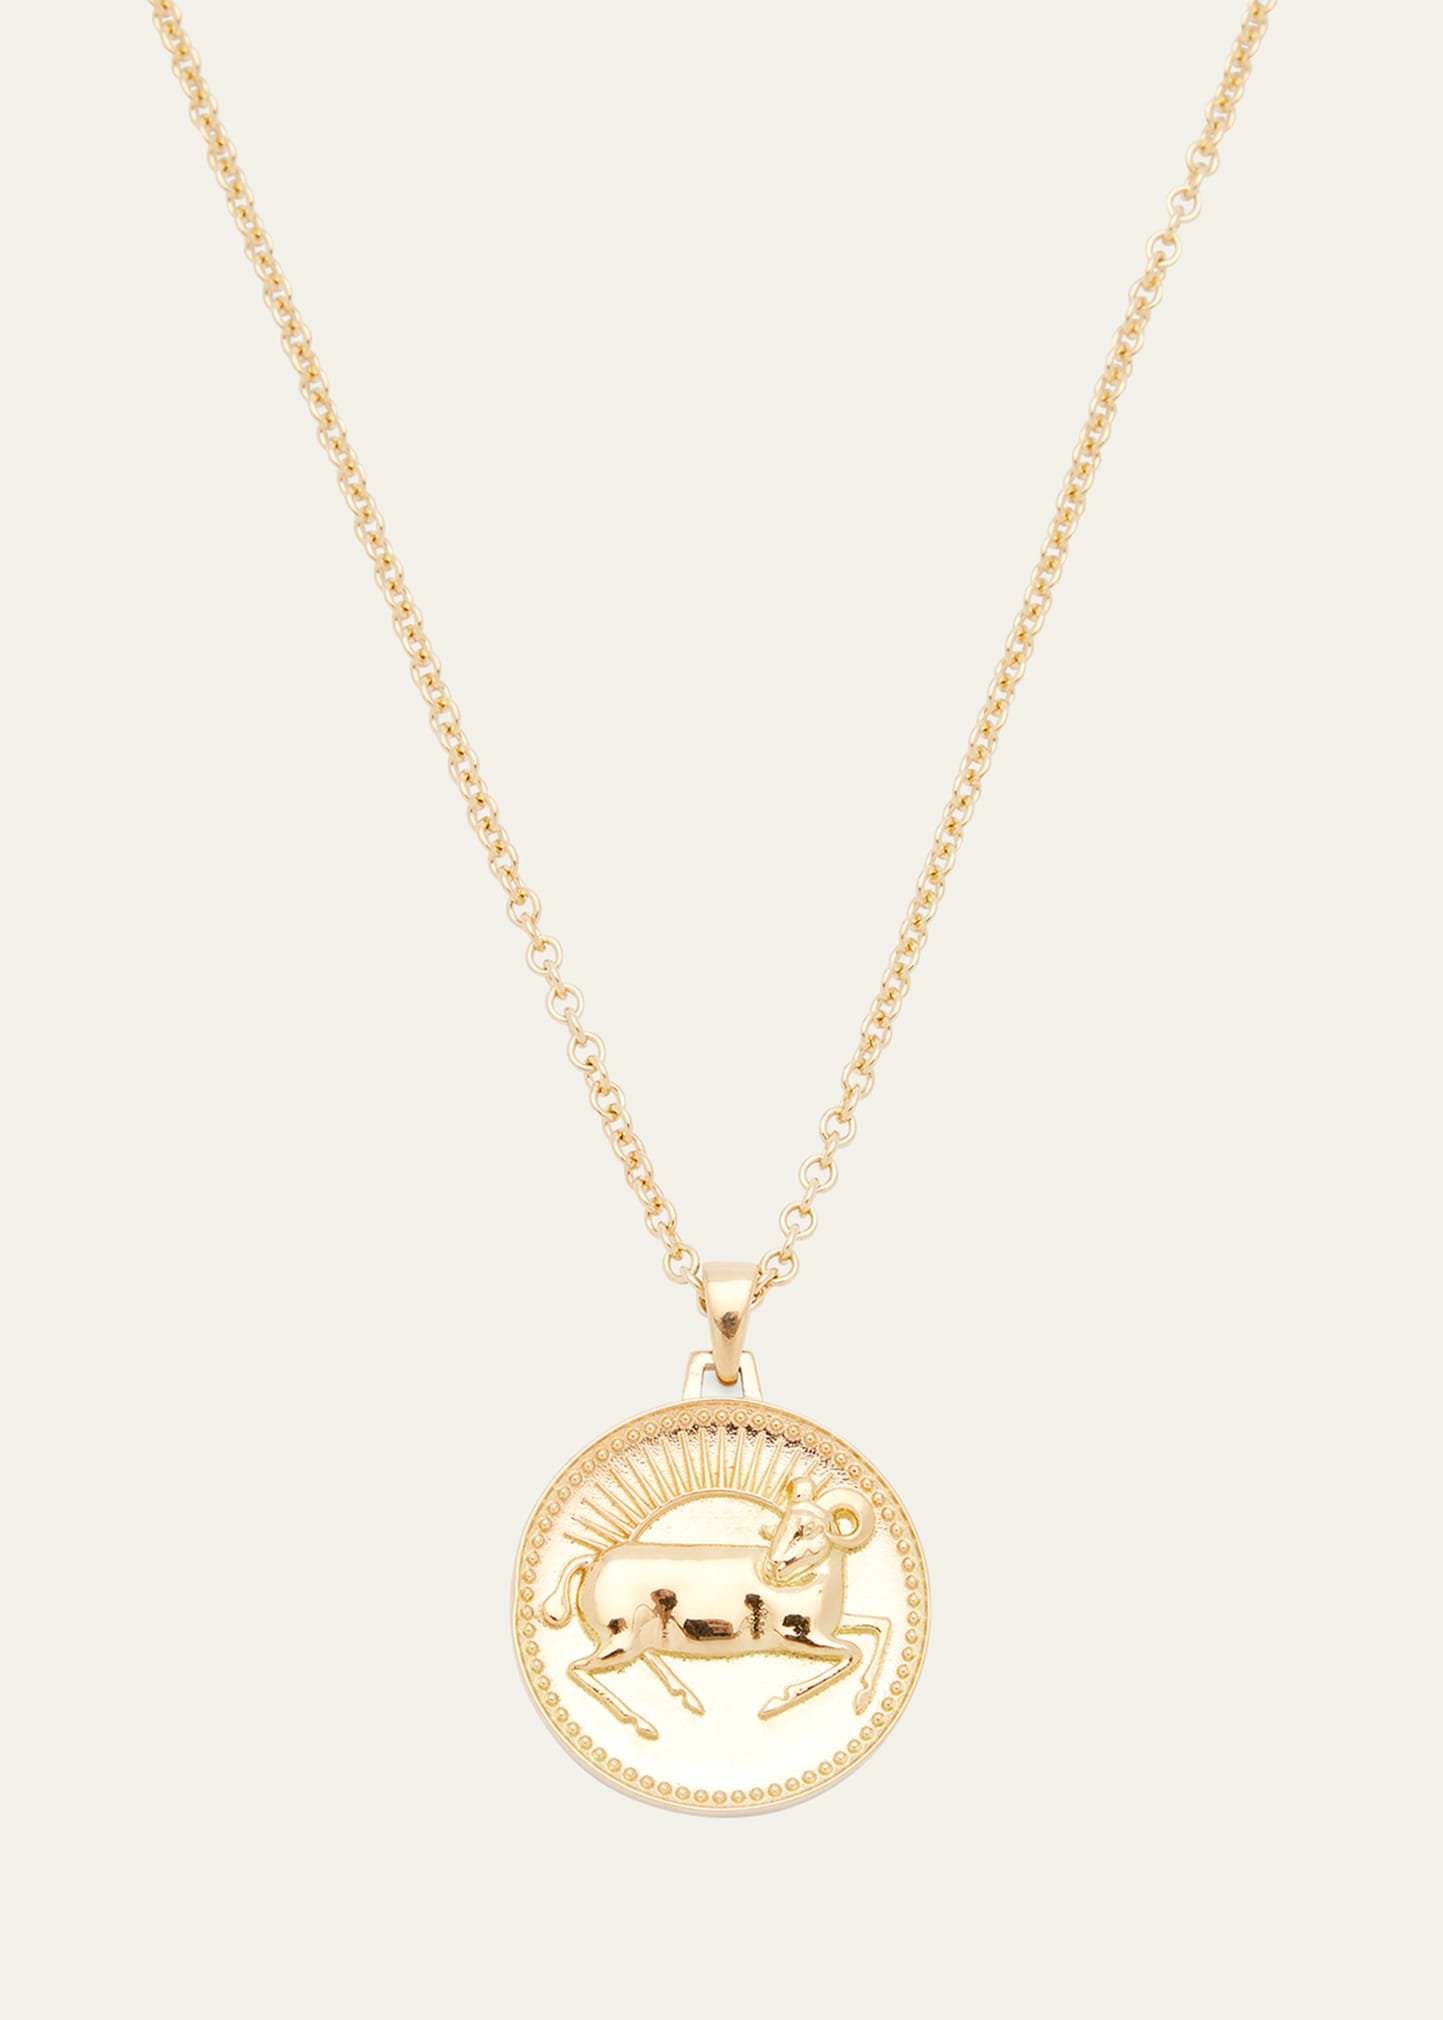 Futura Jewelry Fairmined Gold Capricorn Necklace